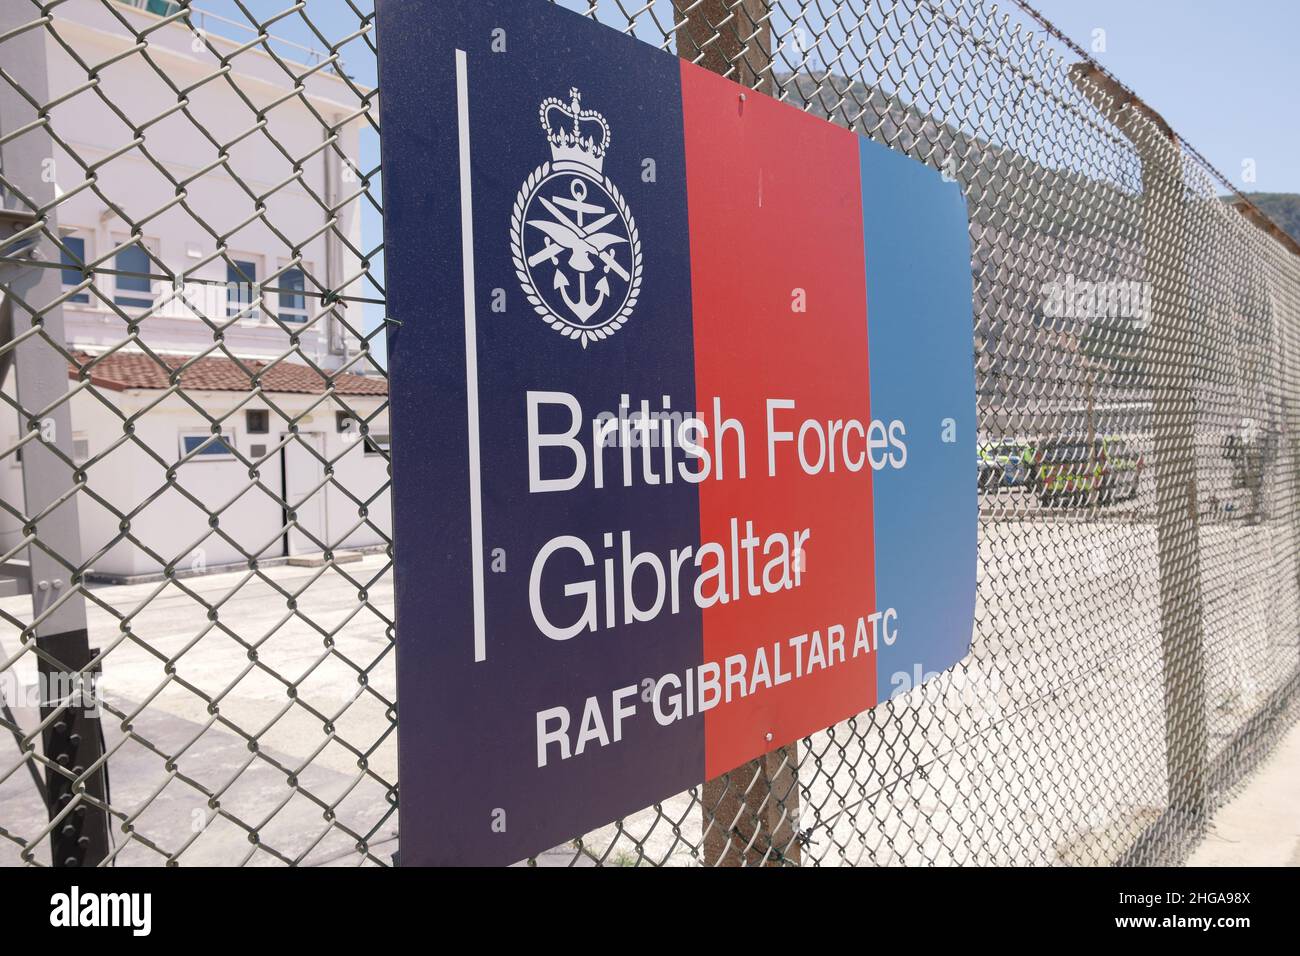 British Forces Gibraltar sign, RAF Gibraltar ATC, Gibraltar, July 2021 Stock Photo